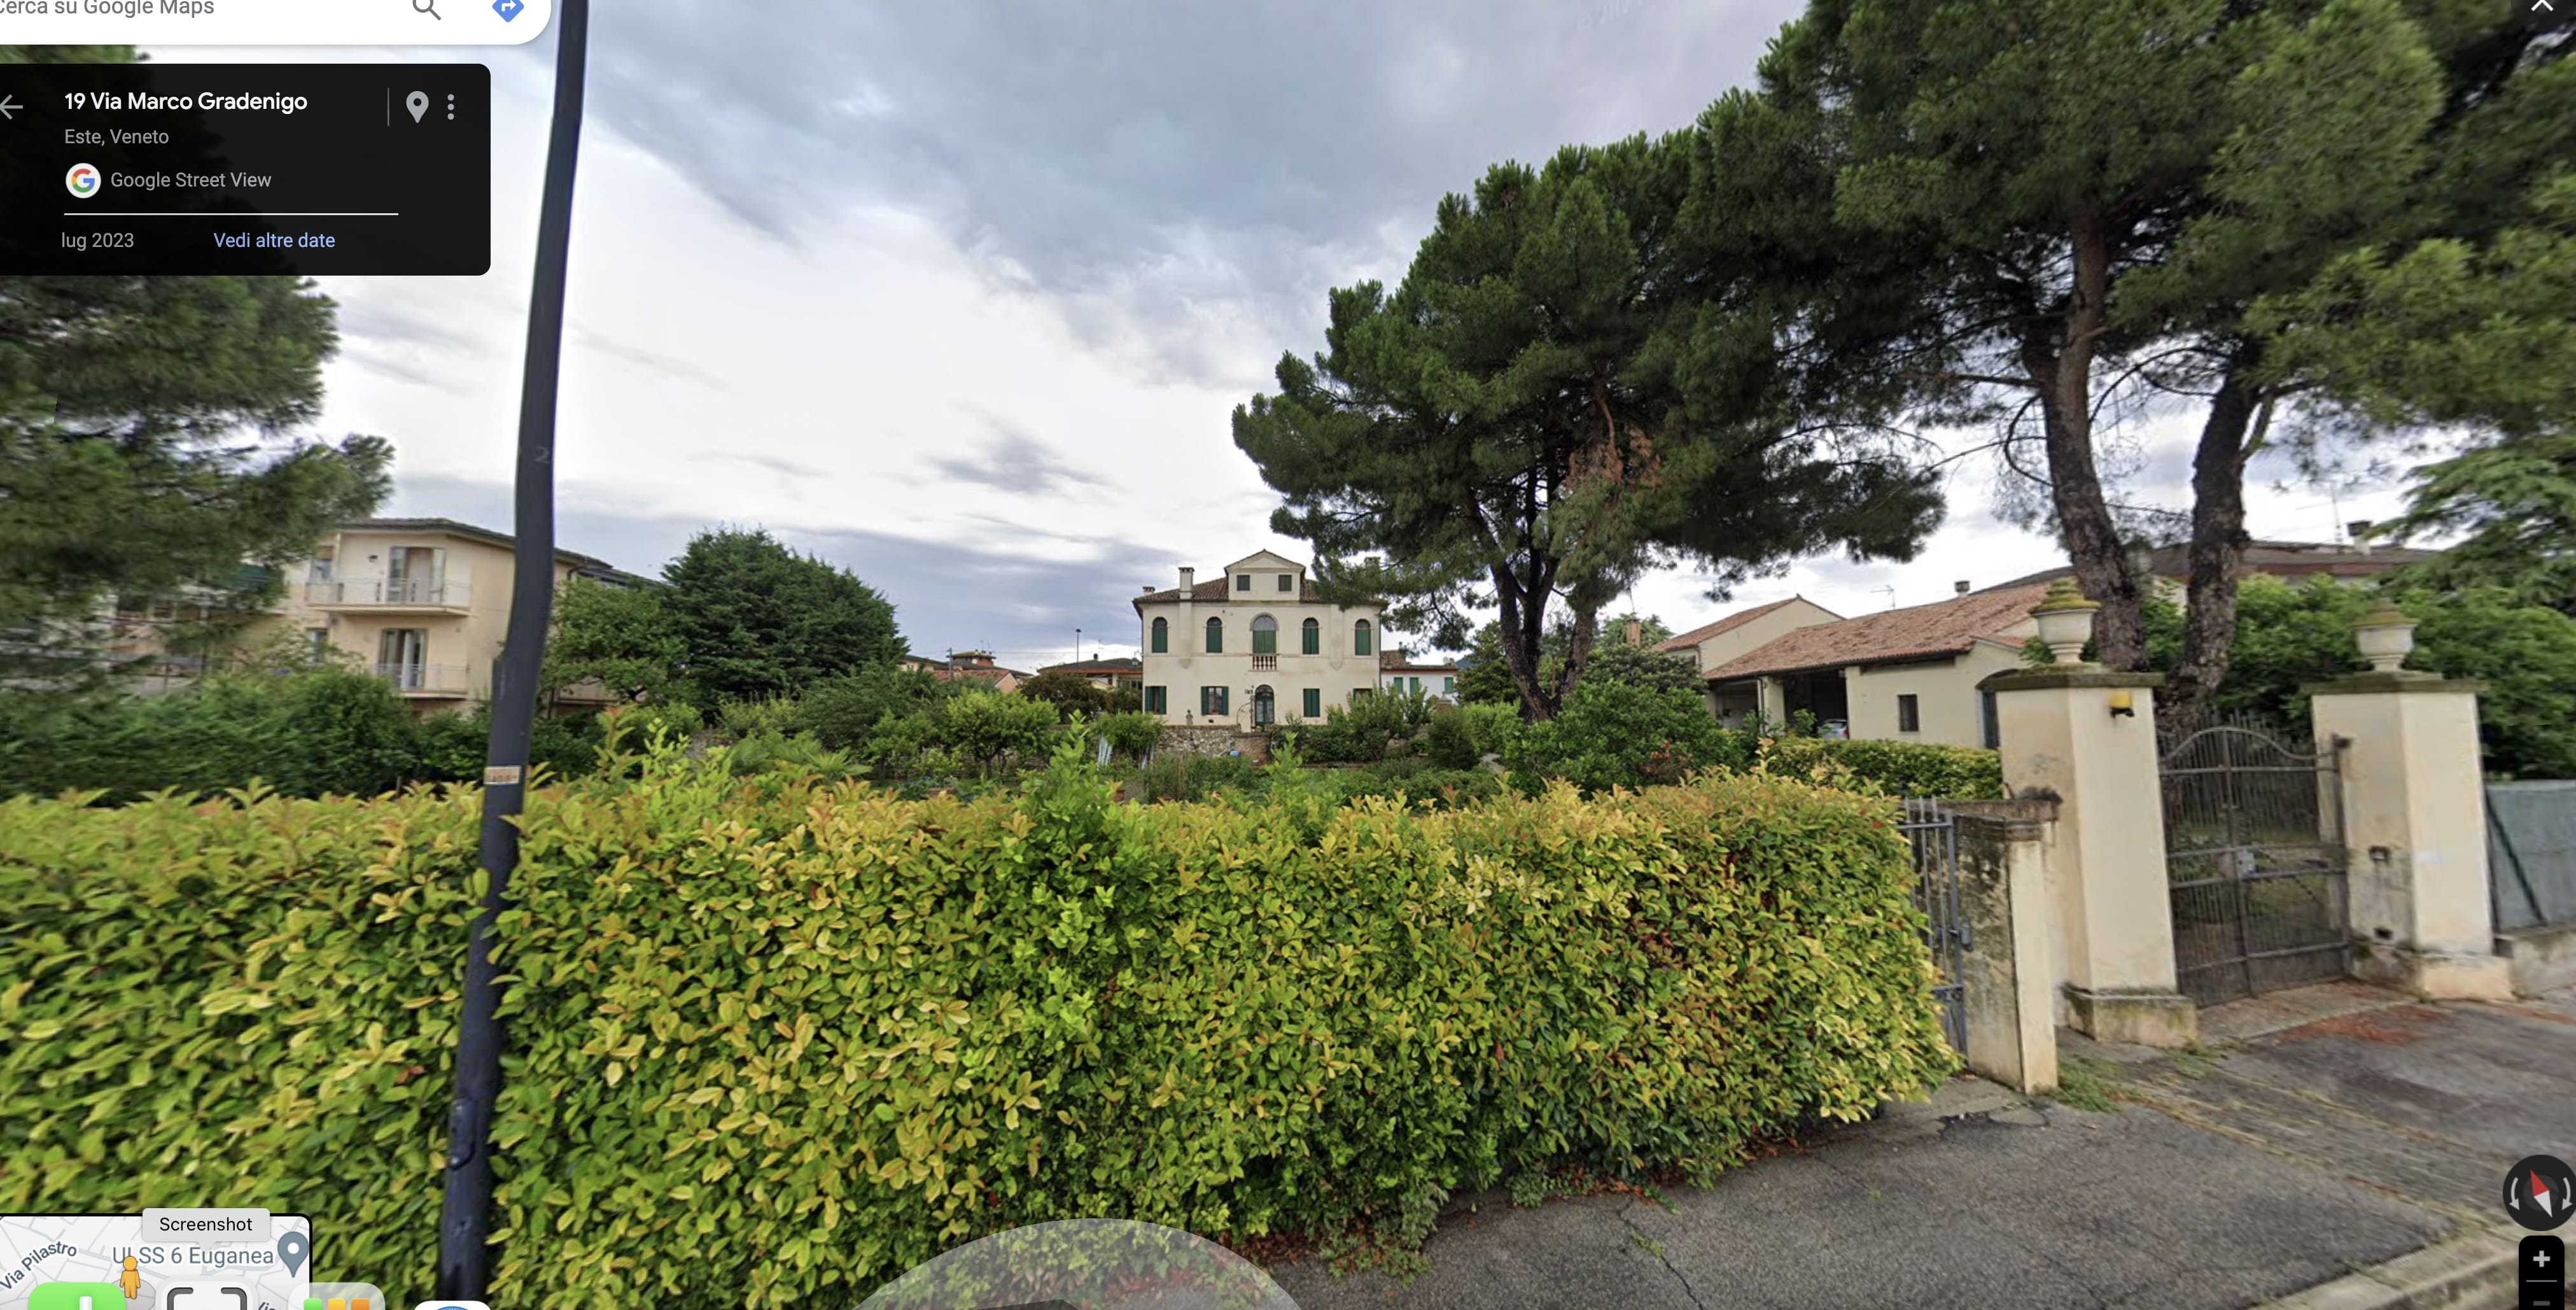 Gradenigo cancello esterno da Google Maps @ Villa Gradenigo Capodaglio Barbiero